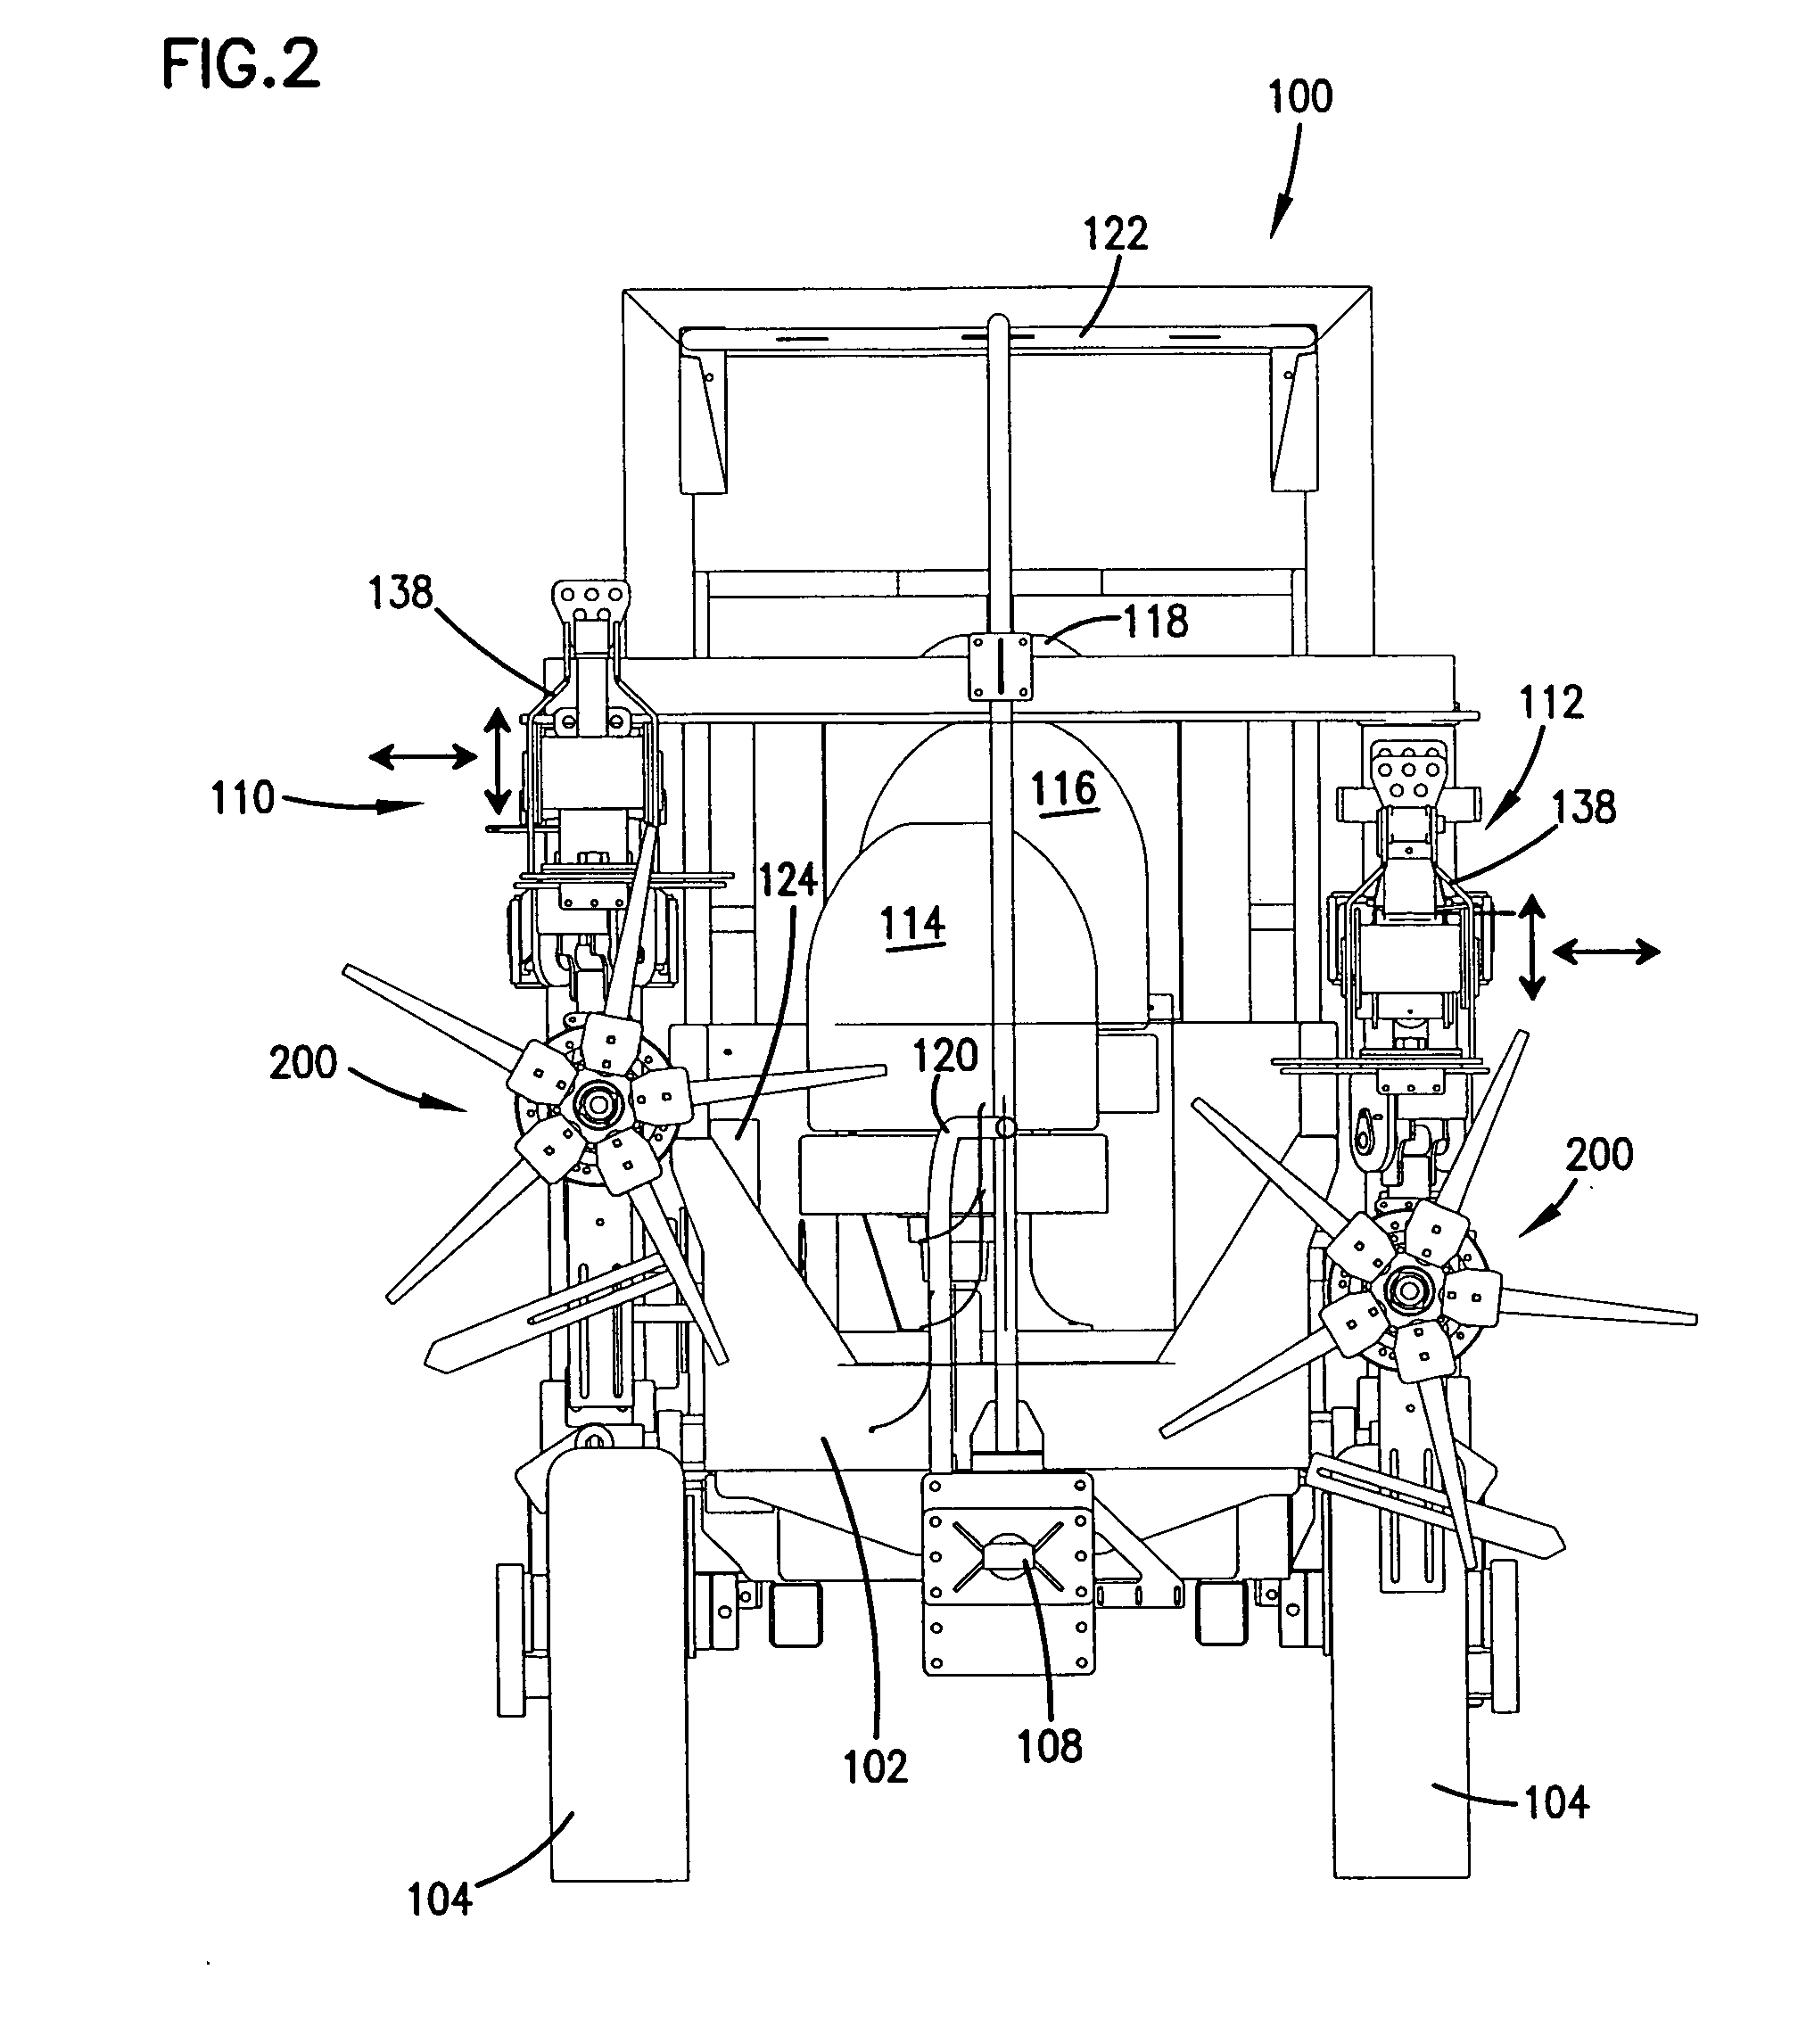 Viticulture apparatus and method